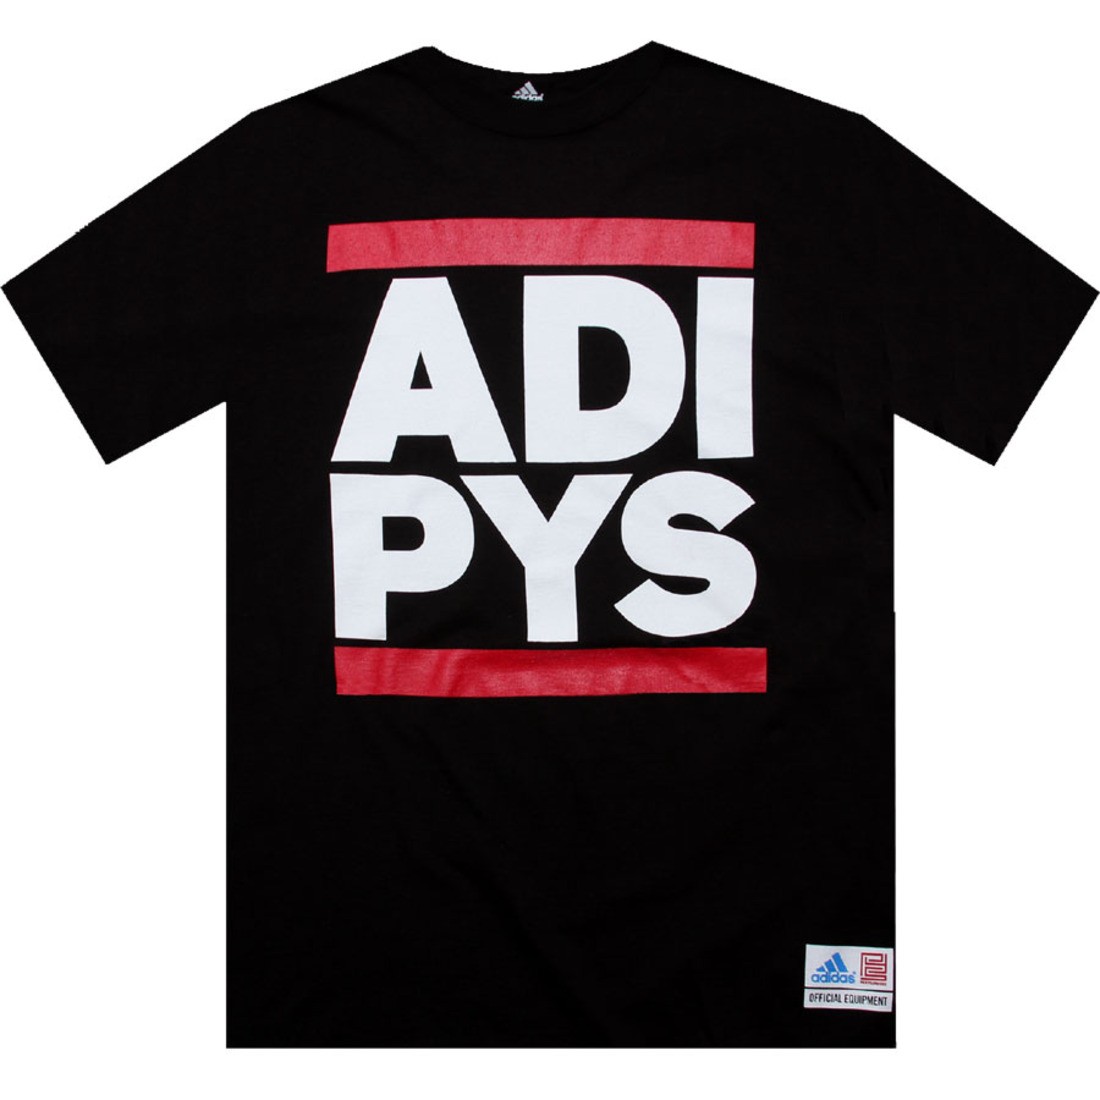 shirt Tee Adidas PYS Run DMC style Adi (black)